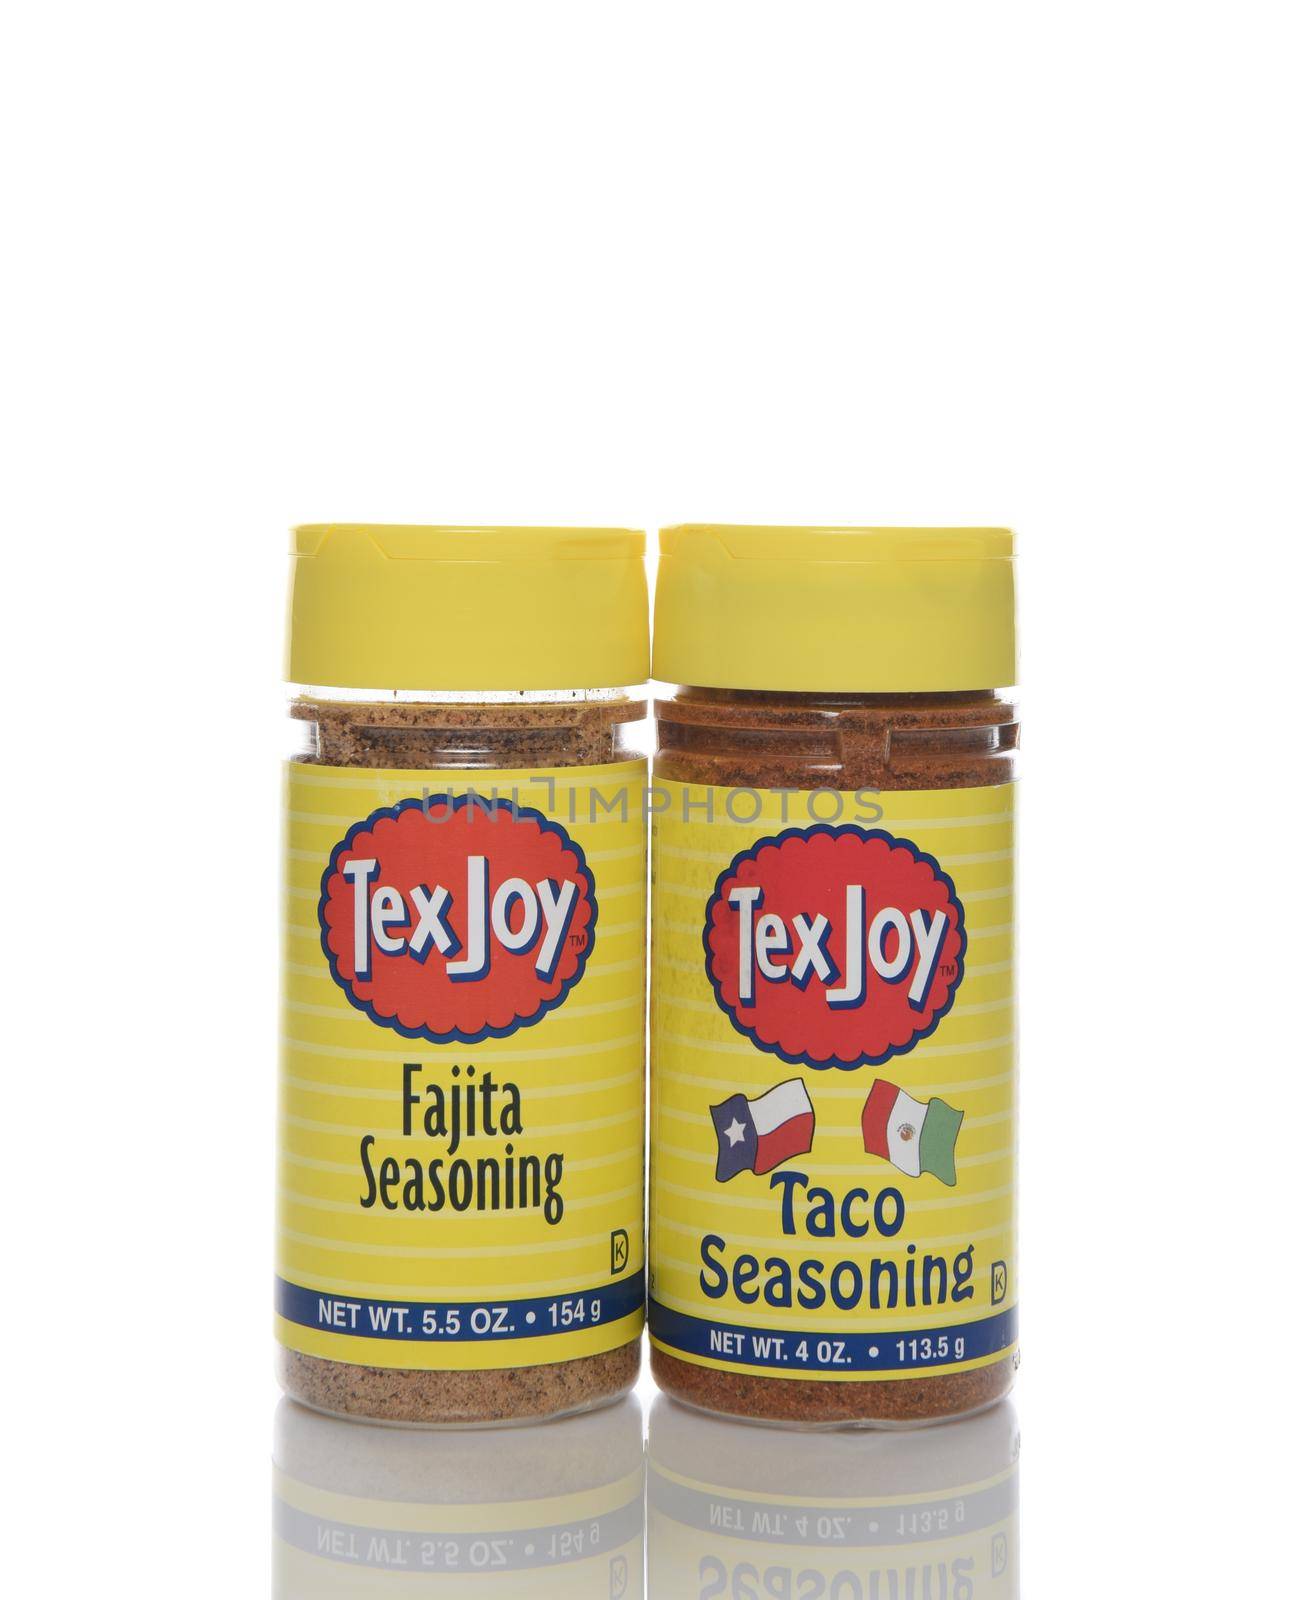 IRVINE, CALIF - AUGUST 30, 2018: Tex Joy Seasonings, A bottle of Fajita and Taco seasoning from the Texas Coffee Company of Beaumont, TX.